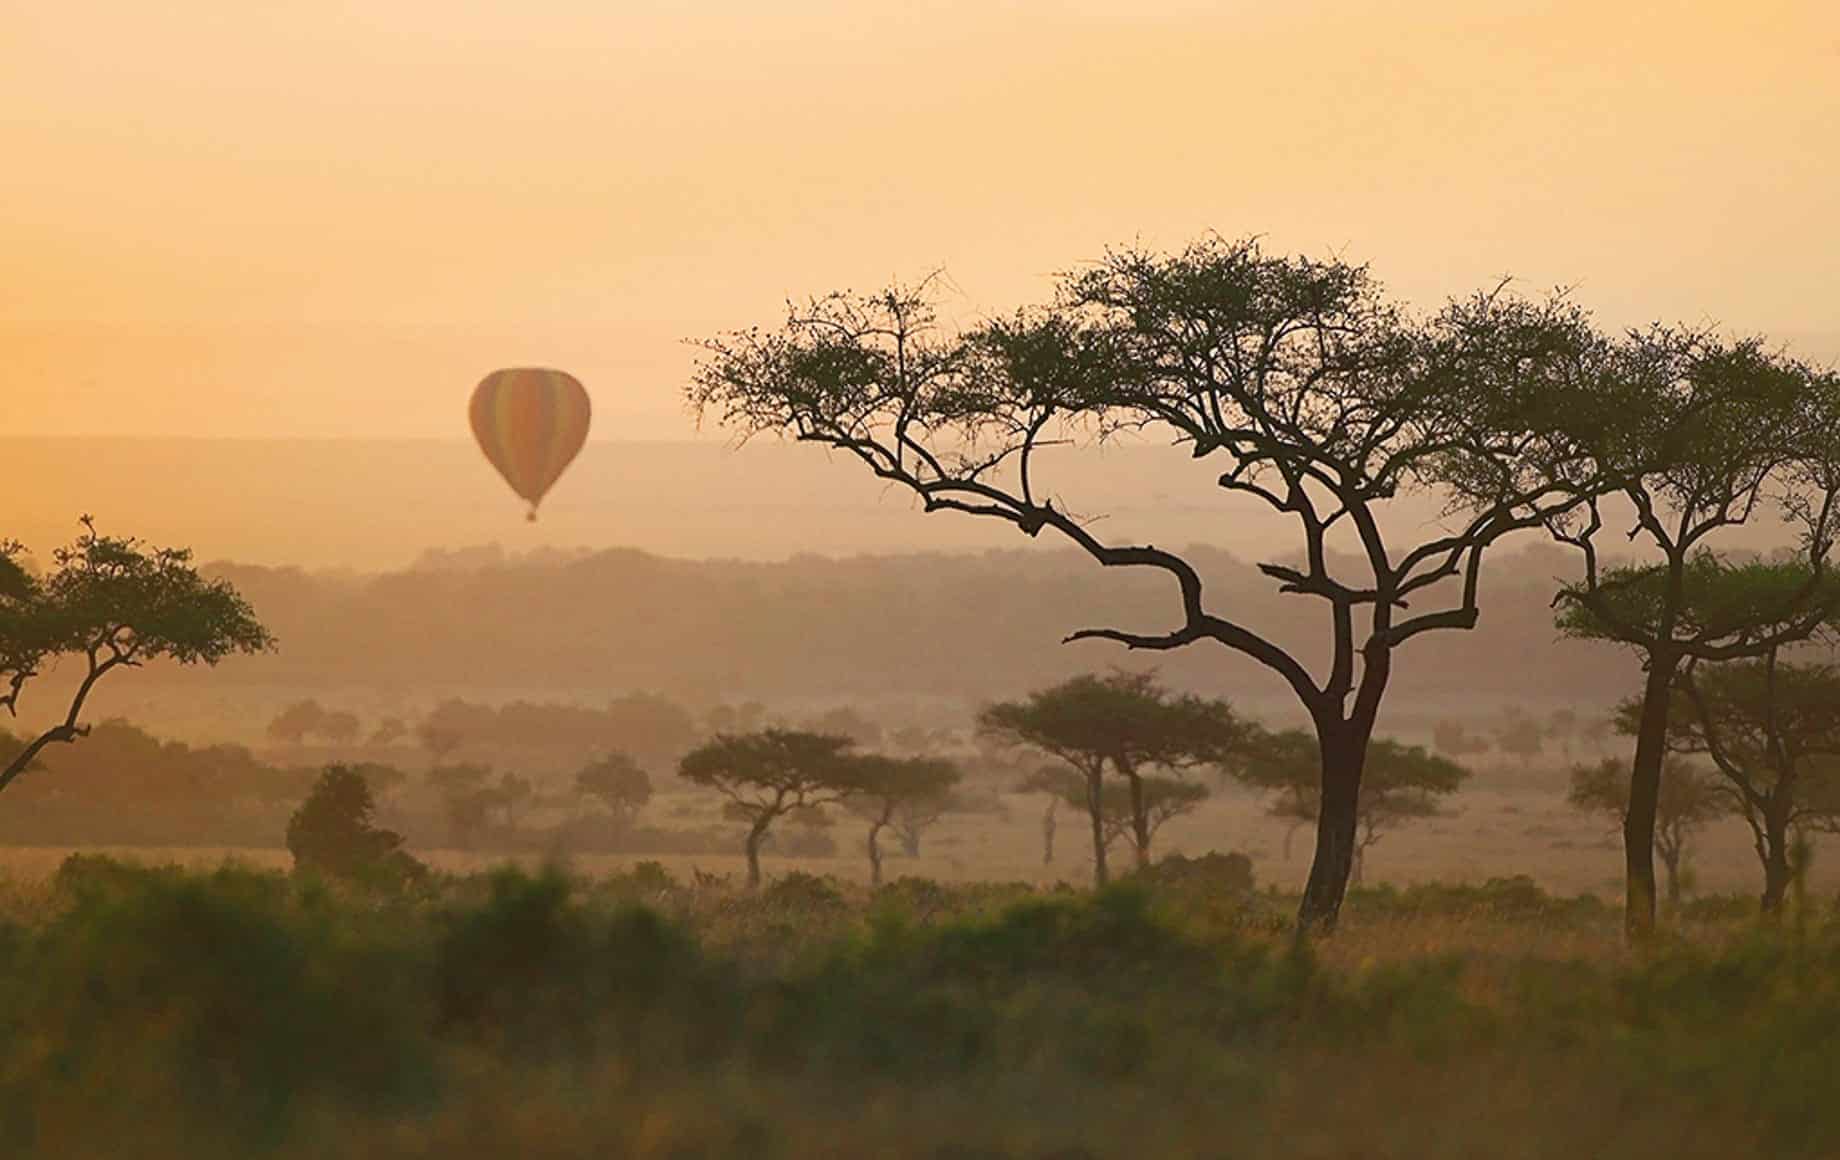 Hot air balloon safari over Masai Mara